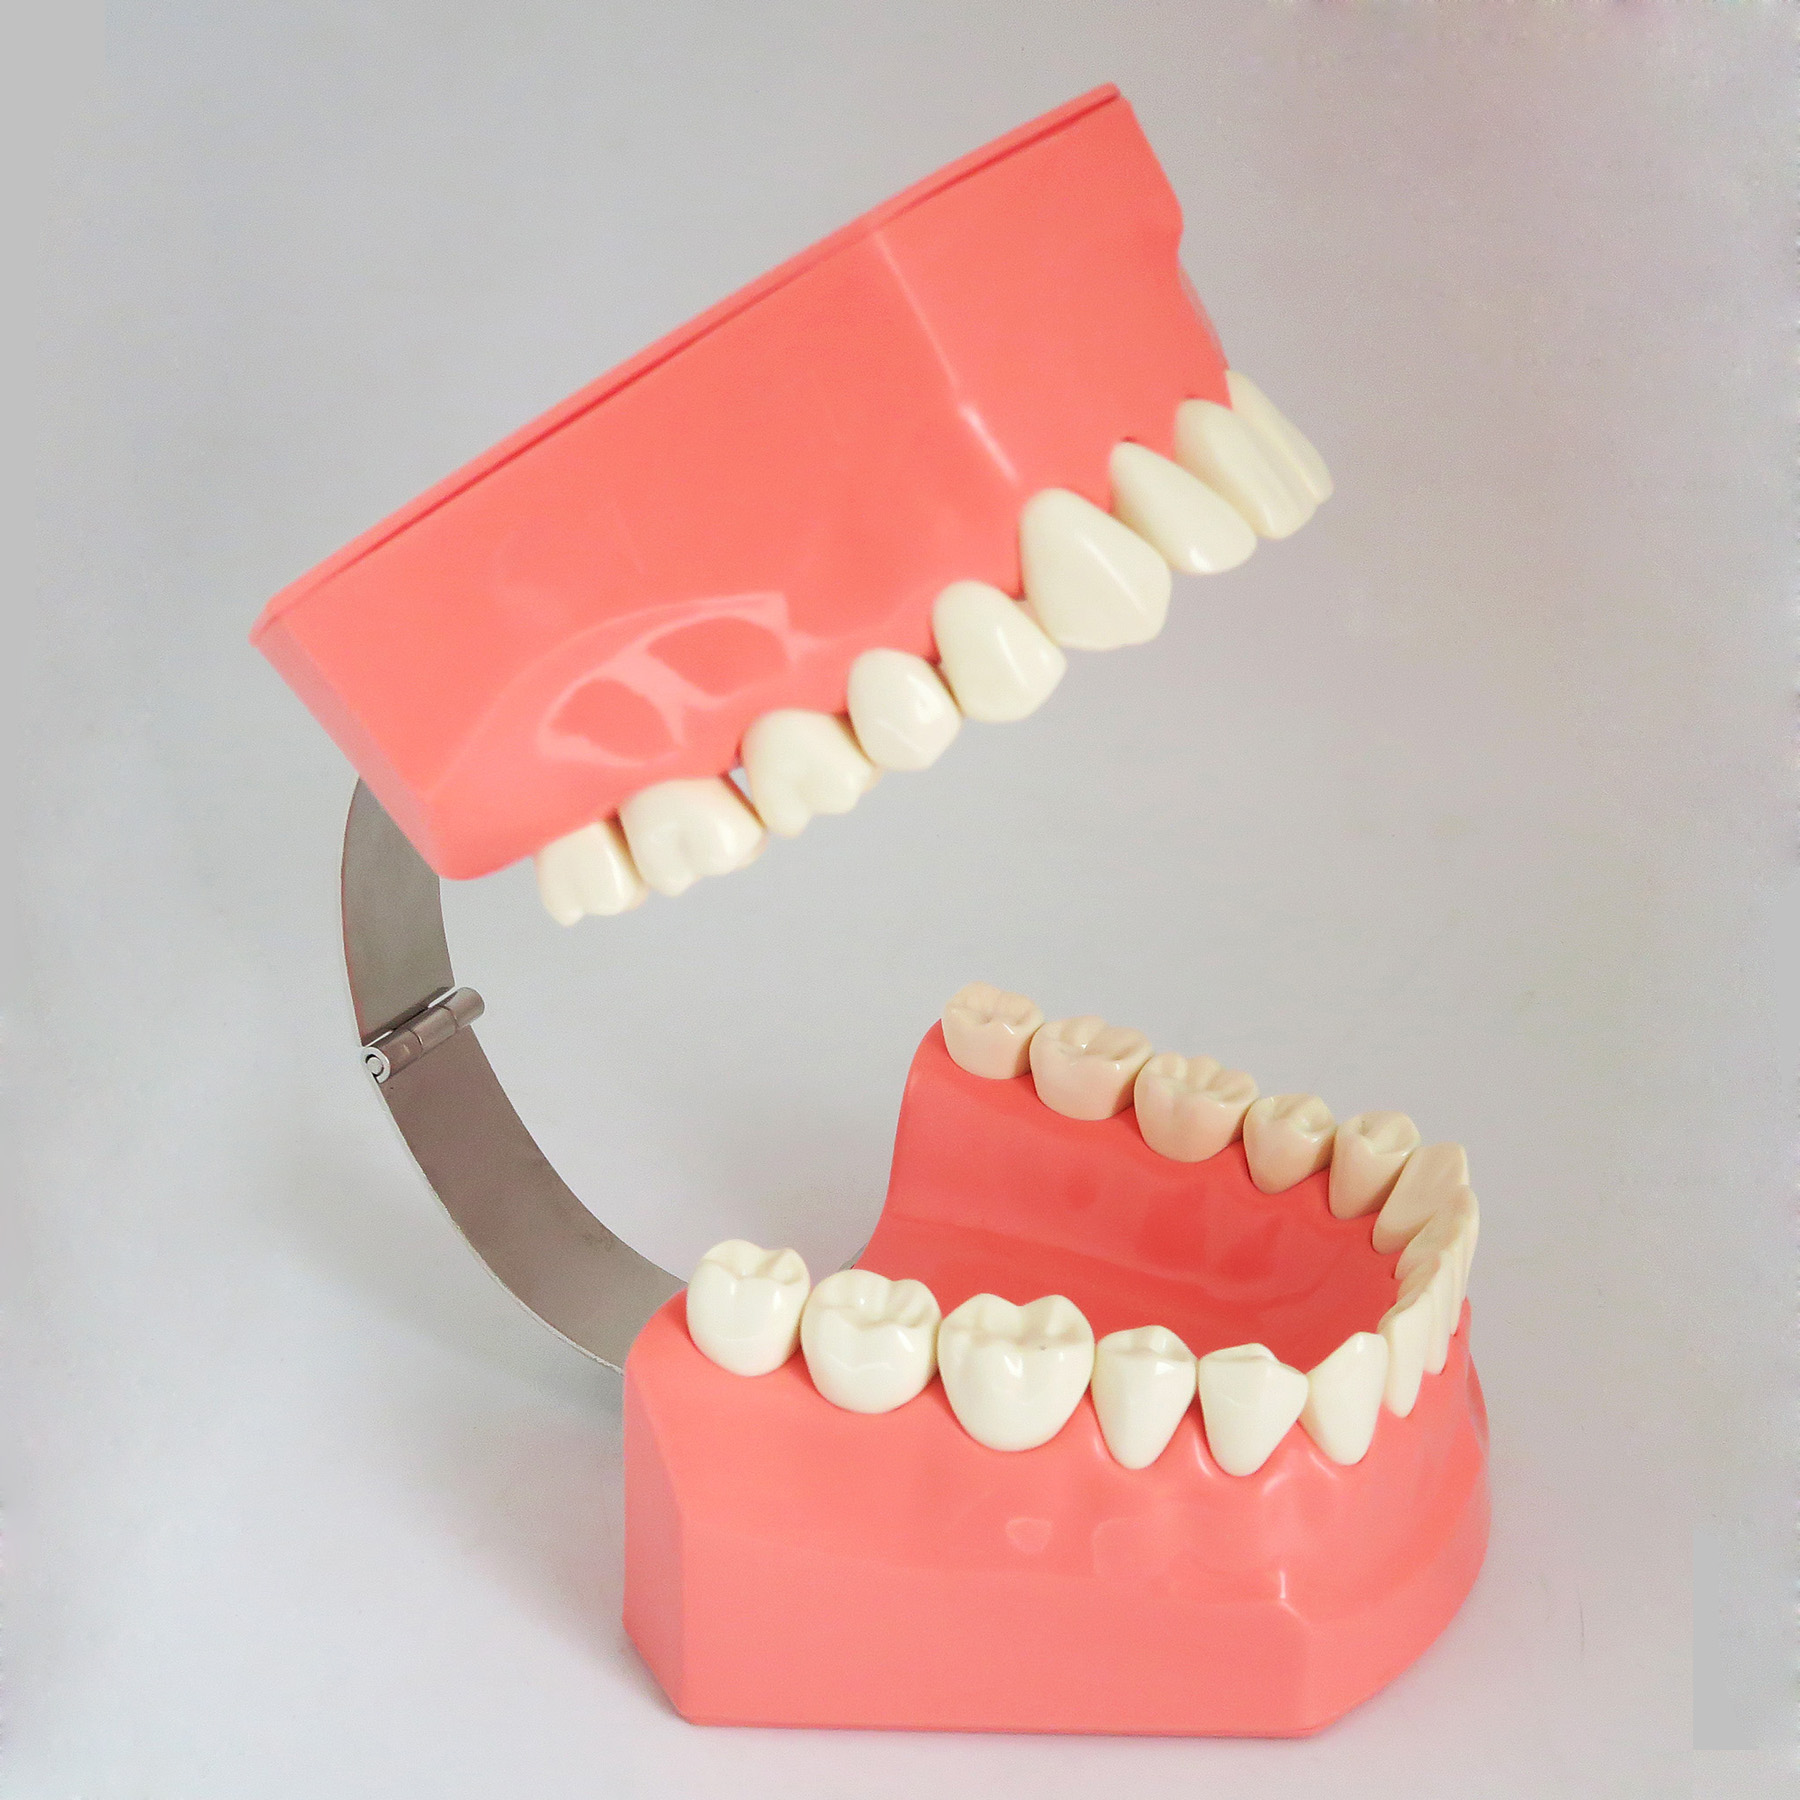 TM-S1二次刷牙模型